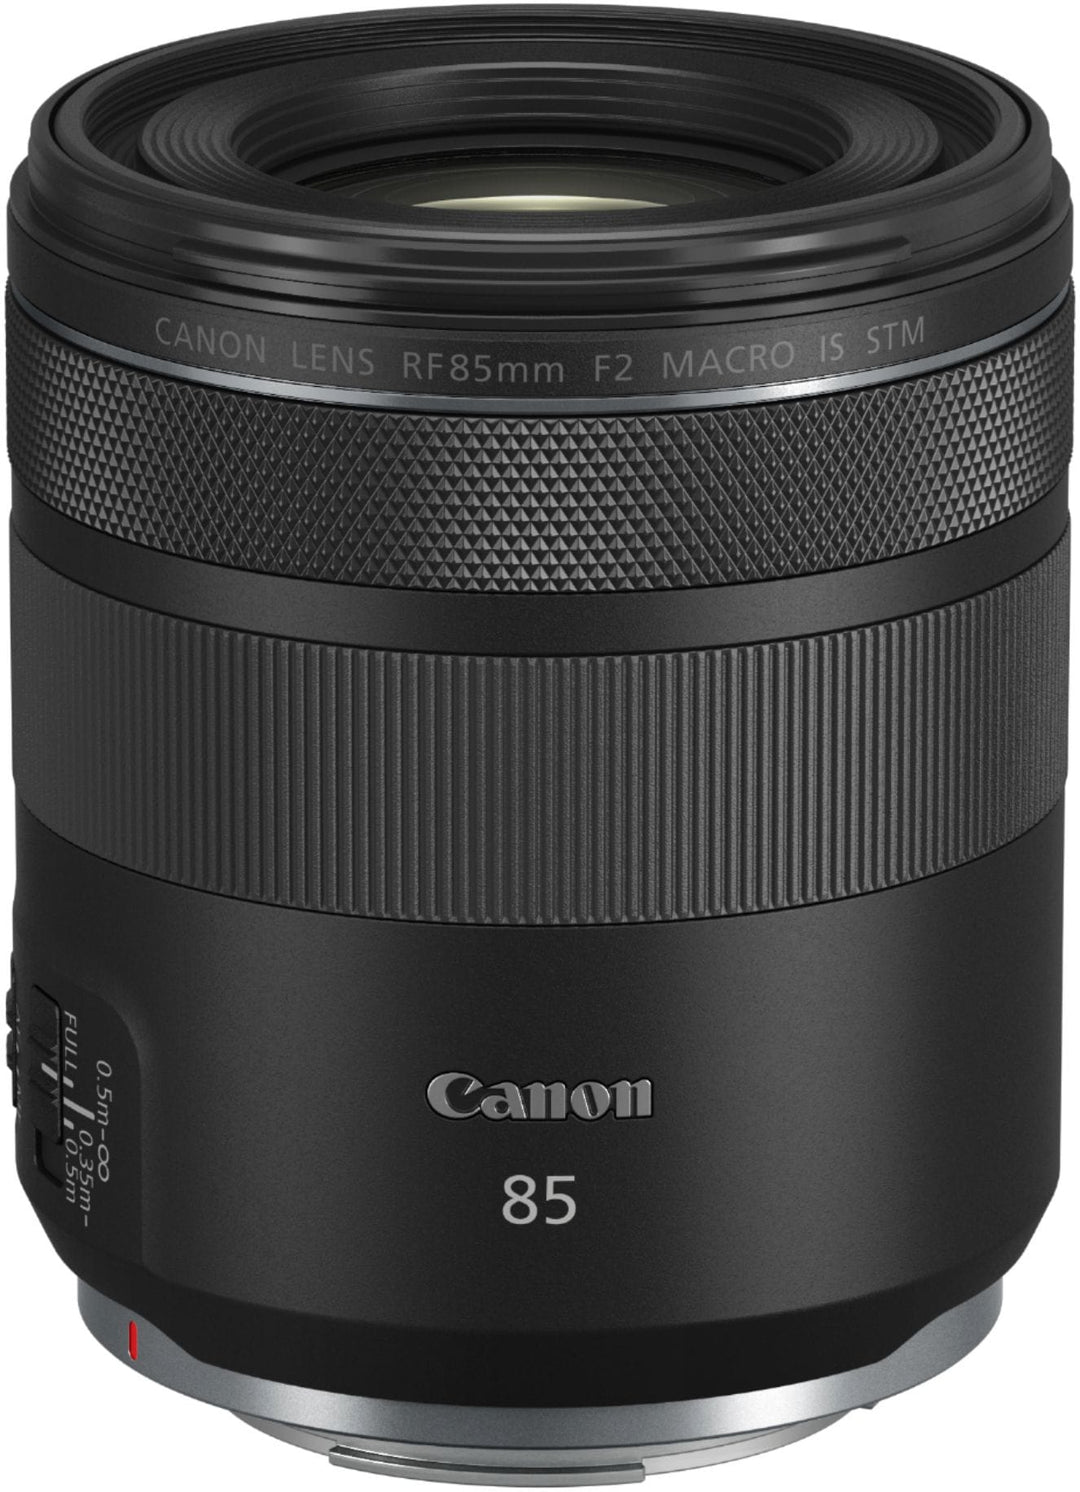 Canon - RF 85mm f/2 Macro IS STM Medium Telephoto Lens for EOS R Cameras - Black_3